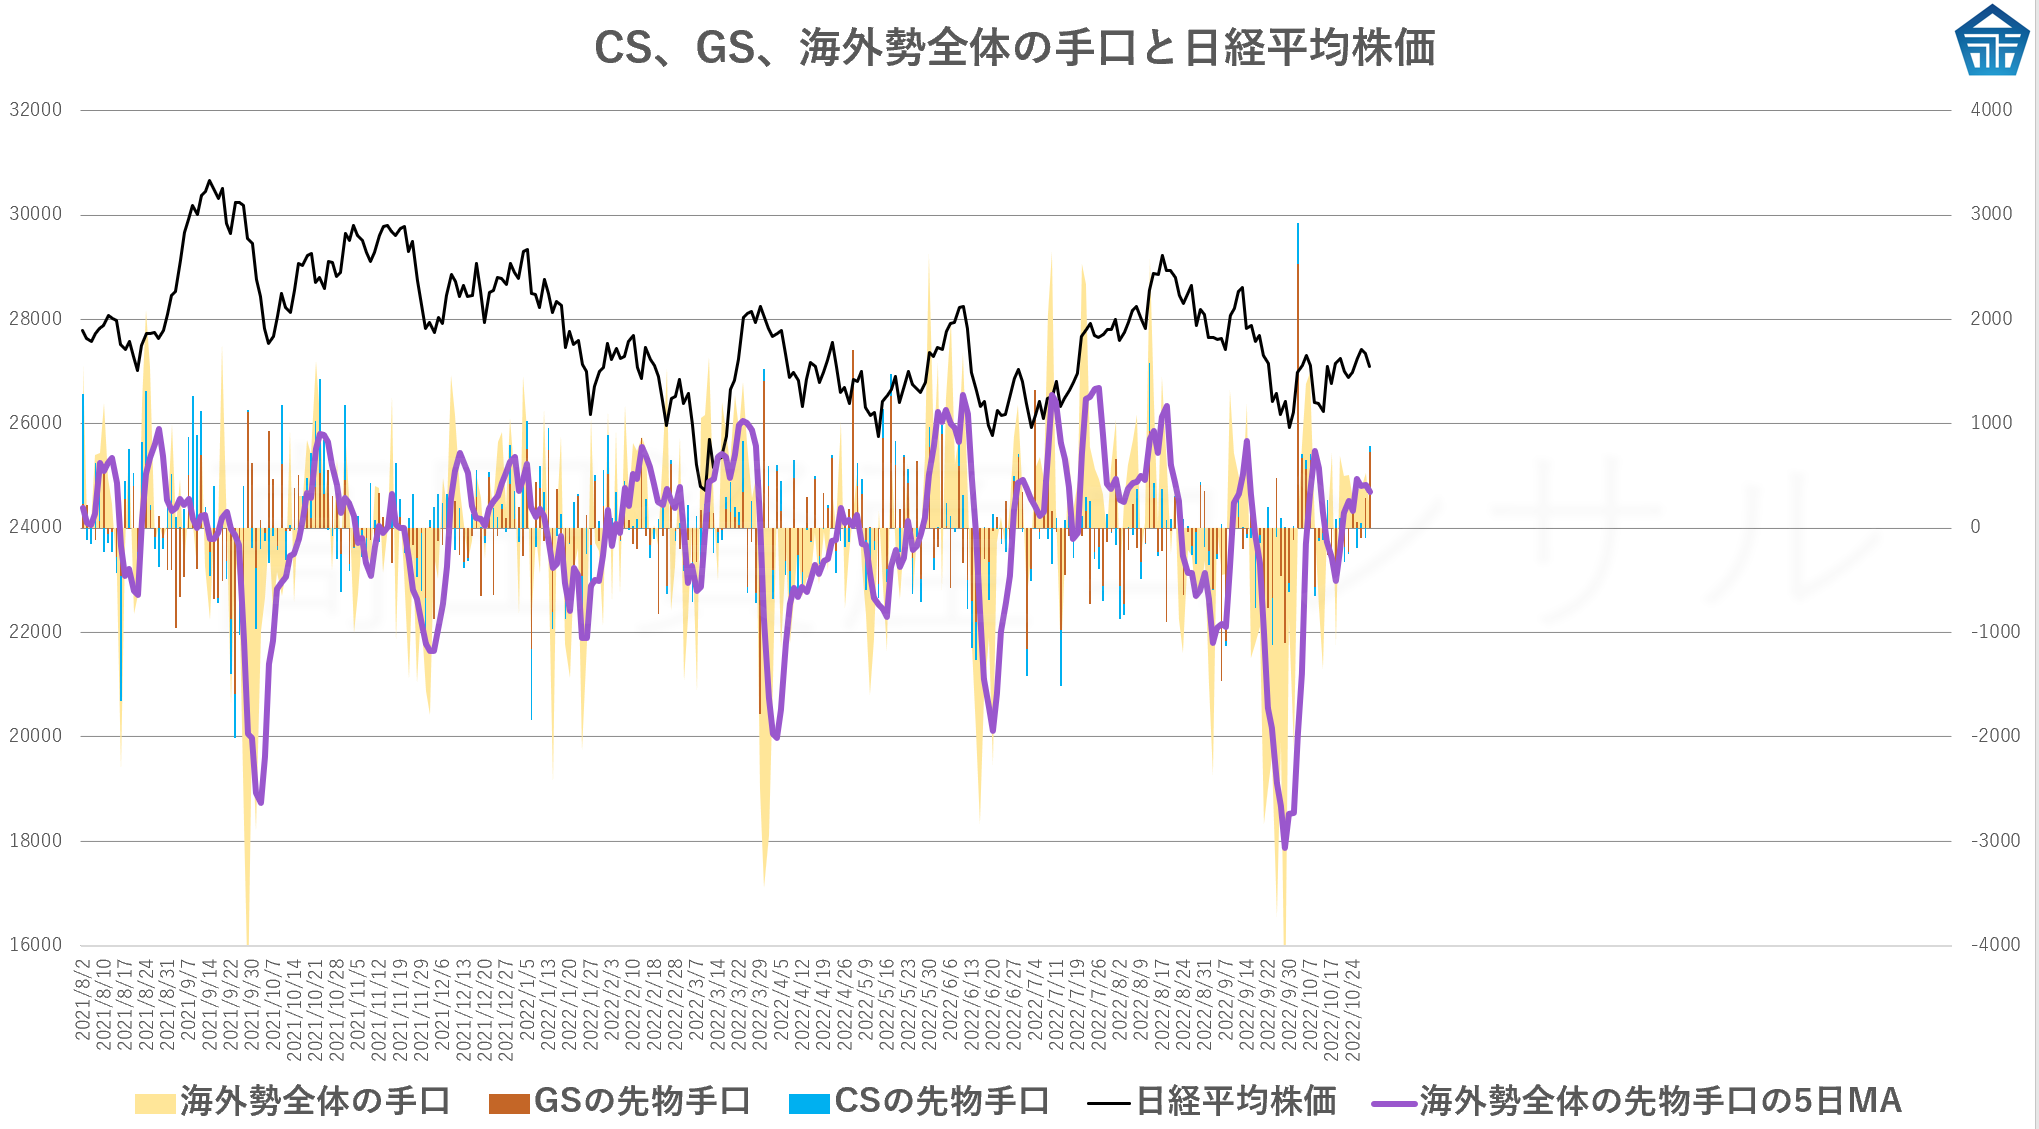 CS、GS、海外勢全体の手口と日経平均株価20221028hihioih778